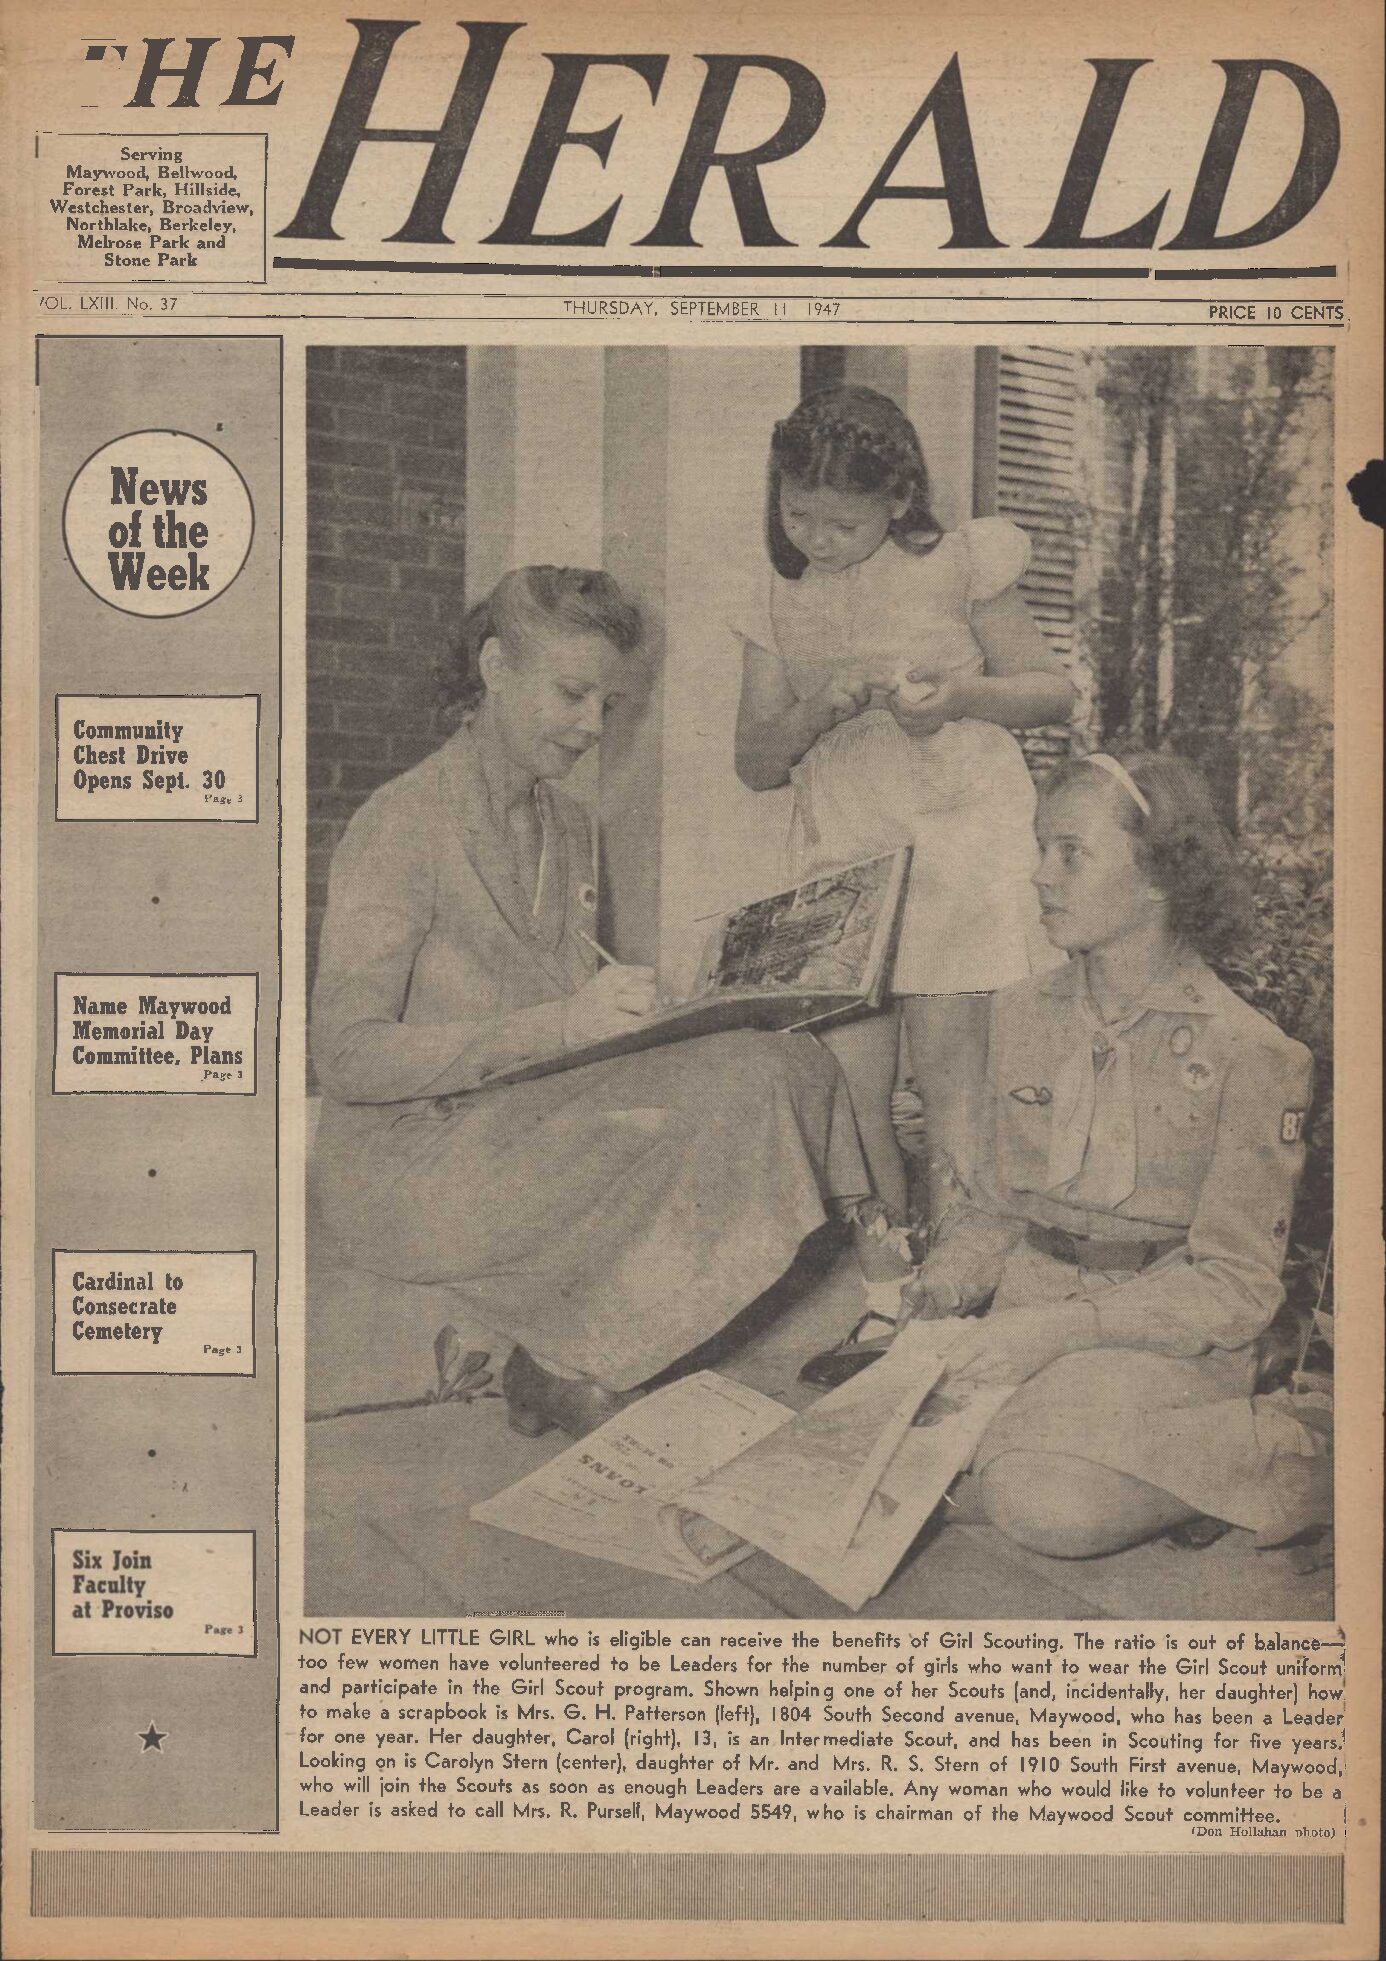 The Herald – 19470911